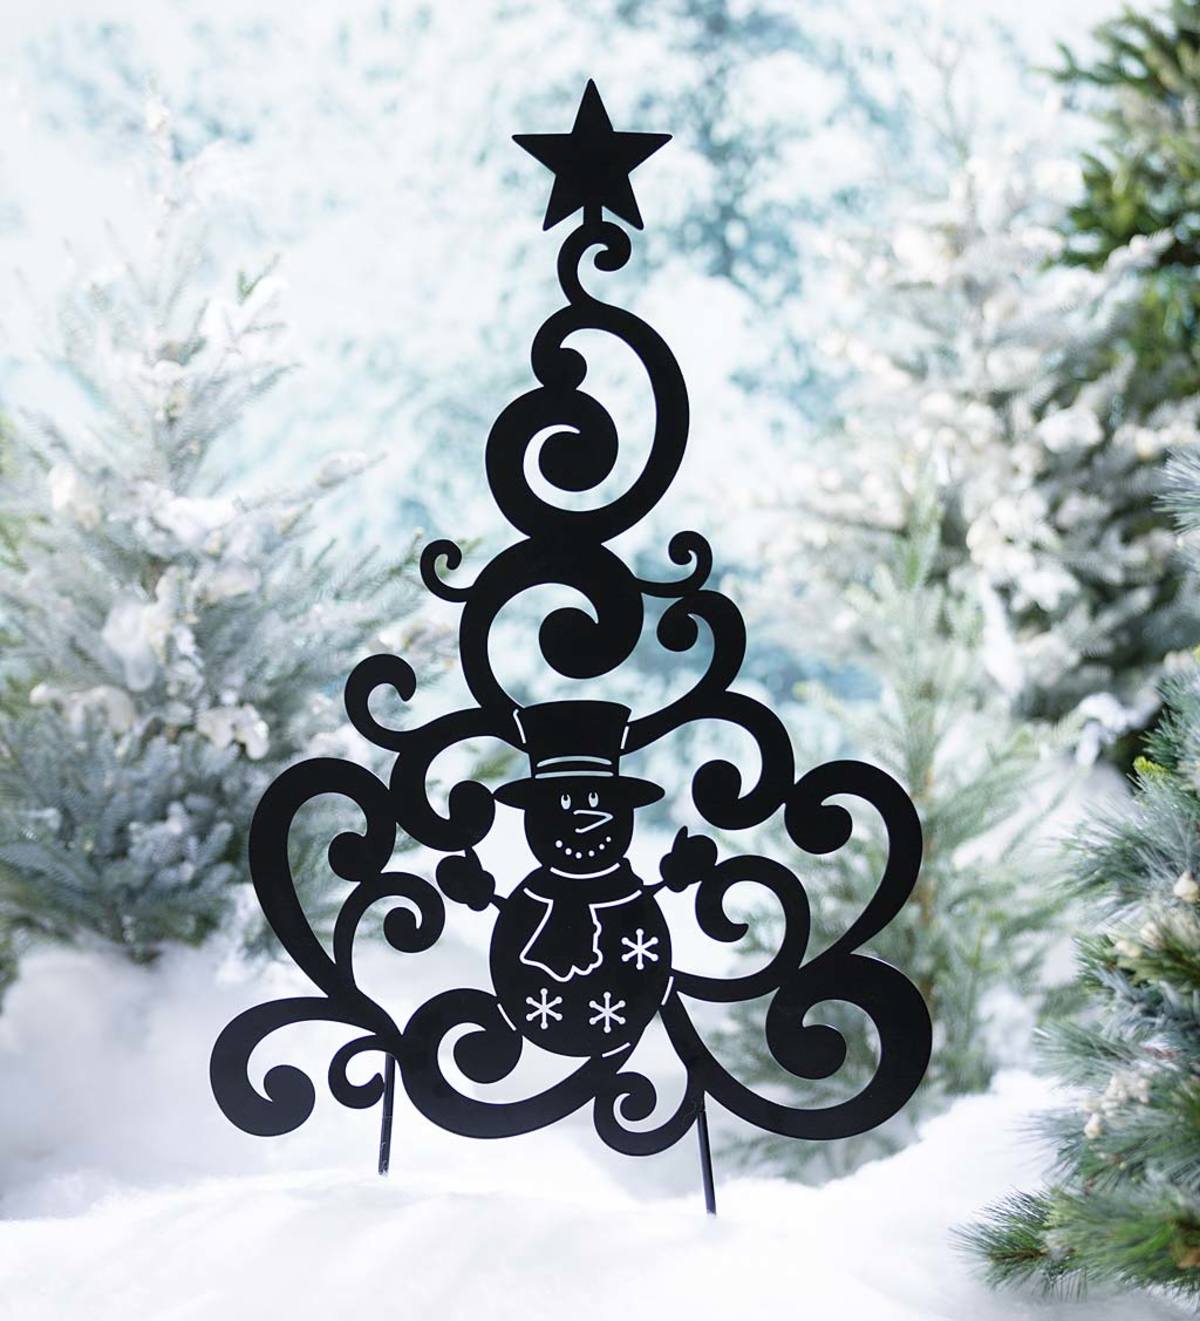 Snowman Christmas Tree Metal Garden Stake